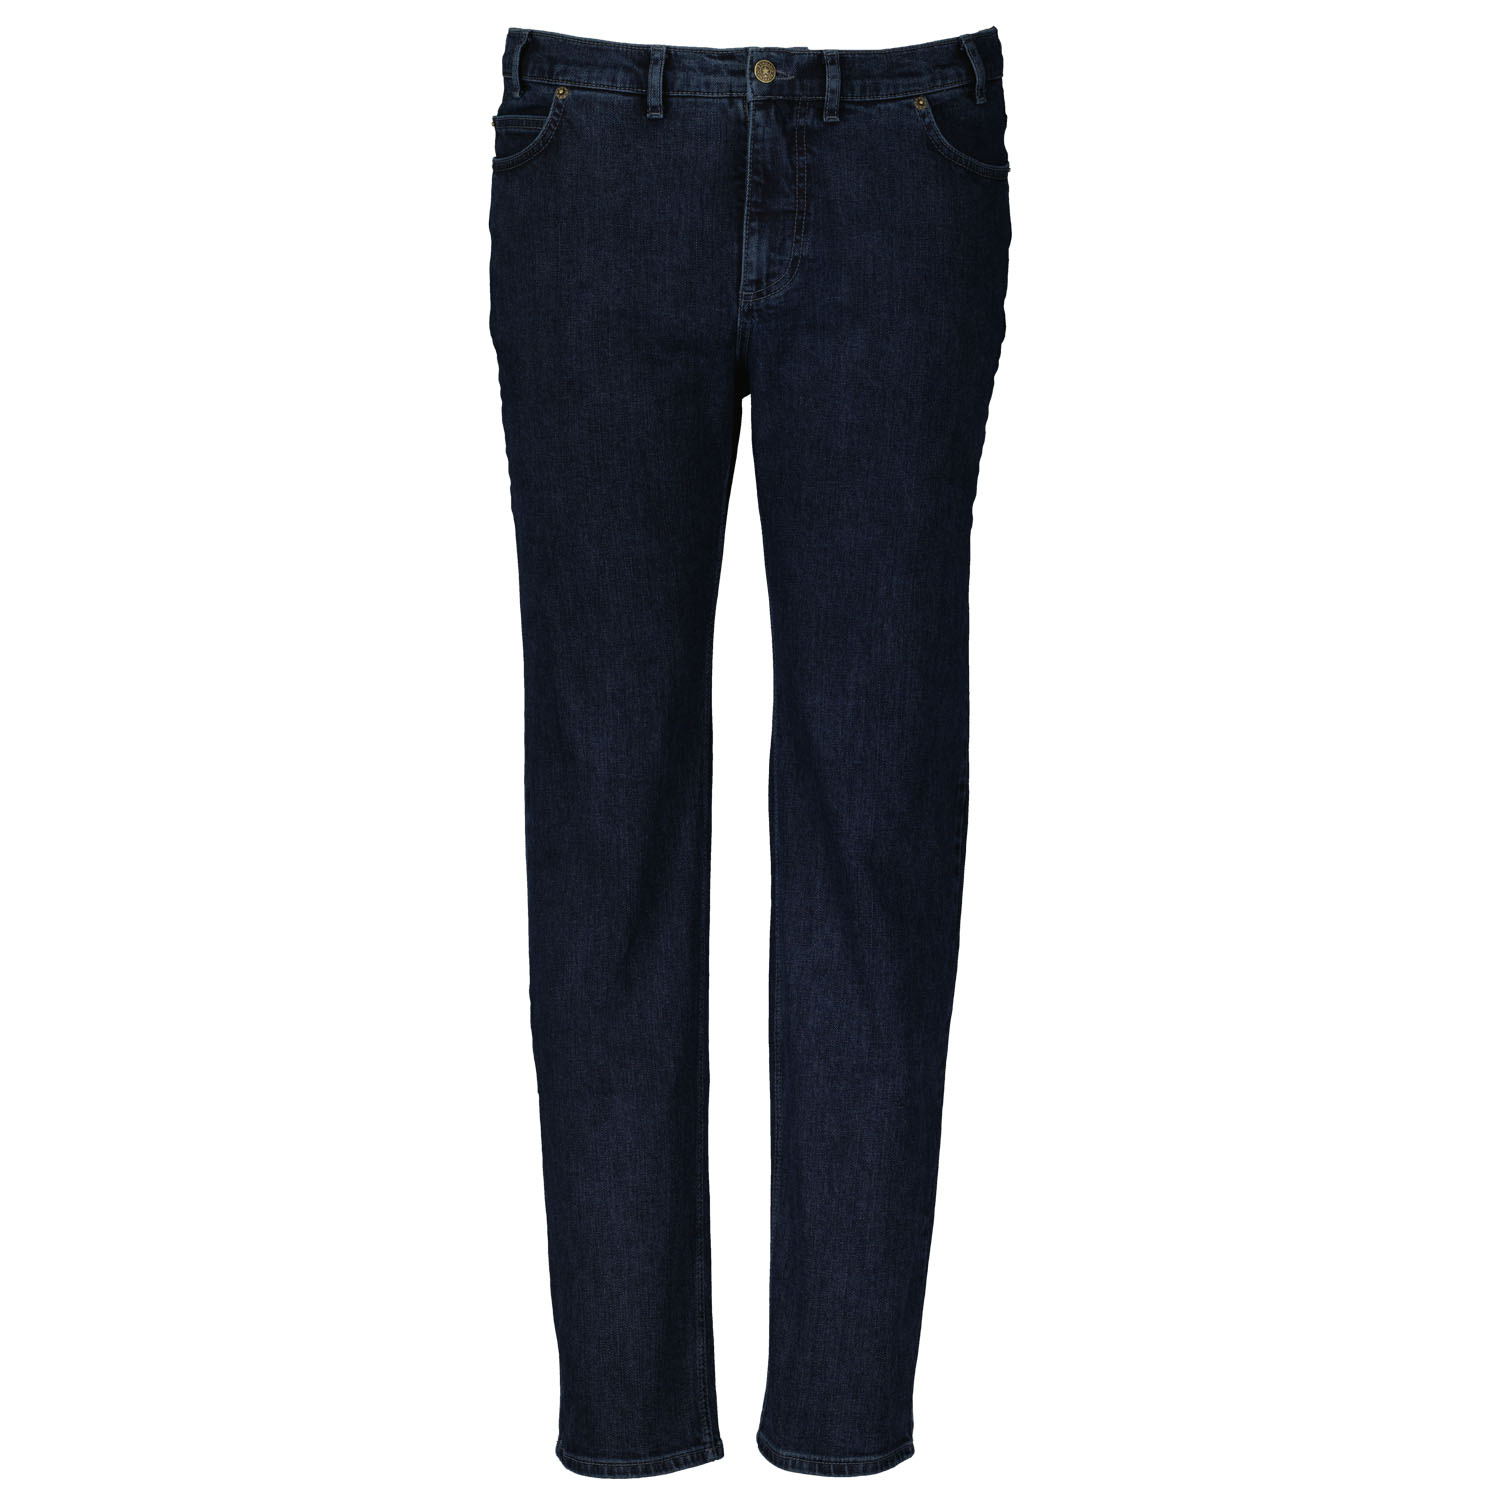 5-Pocket Jeans homme avec stretch série "OHIO" marine by Adamo grandes tailles (Taille haute): 59 - 85